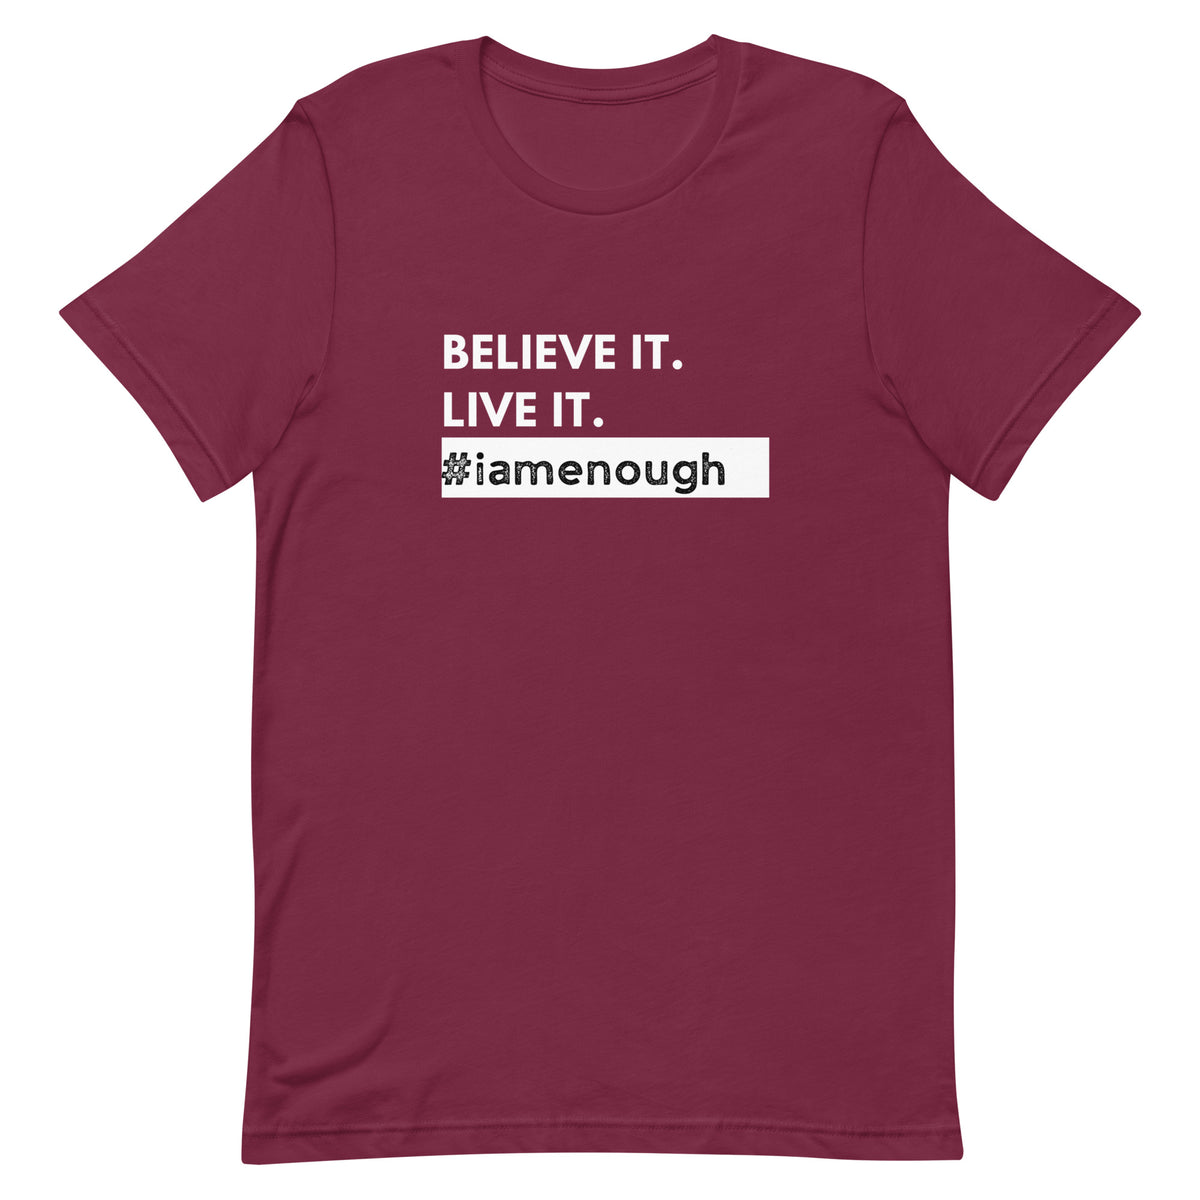 BELIEVE IT. LIVE IT. #iamenough - Motivational Affirmation Graphic Tee for Women